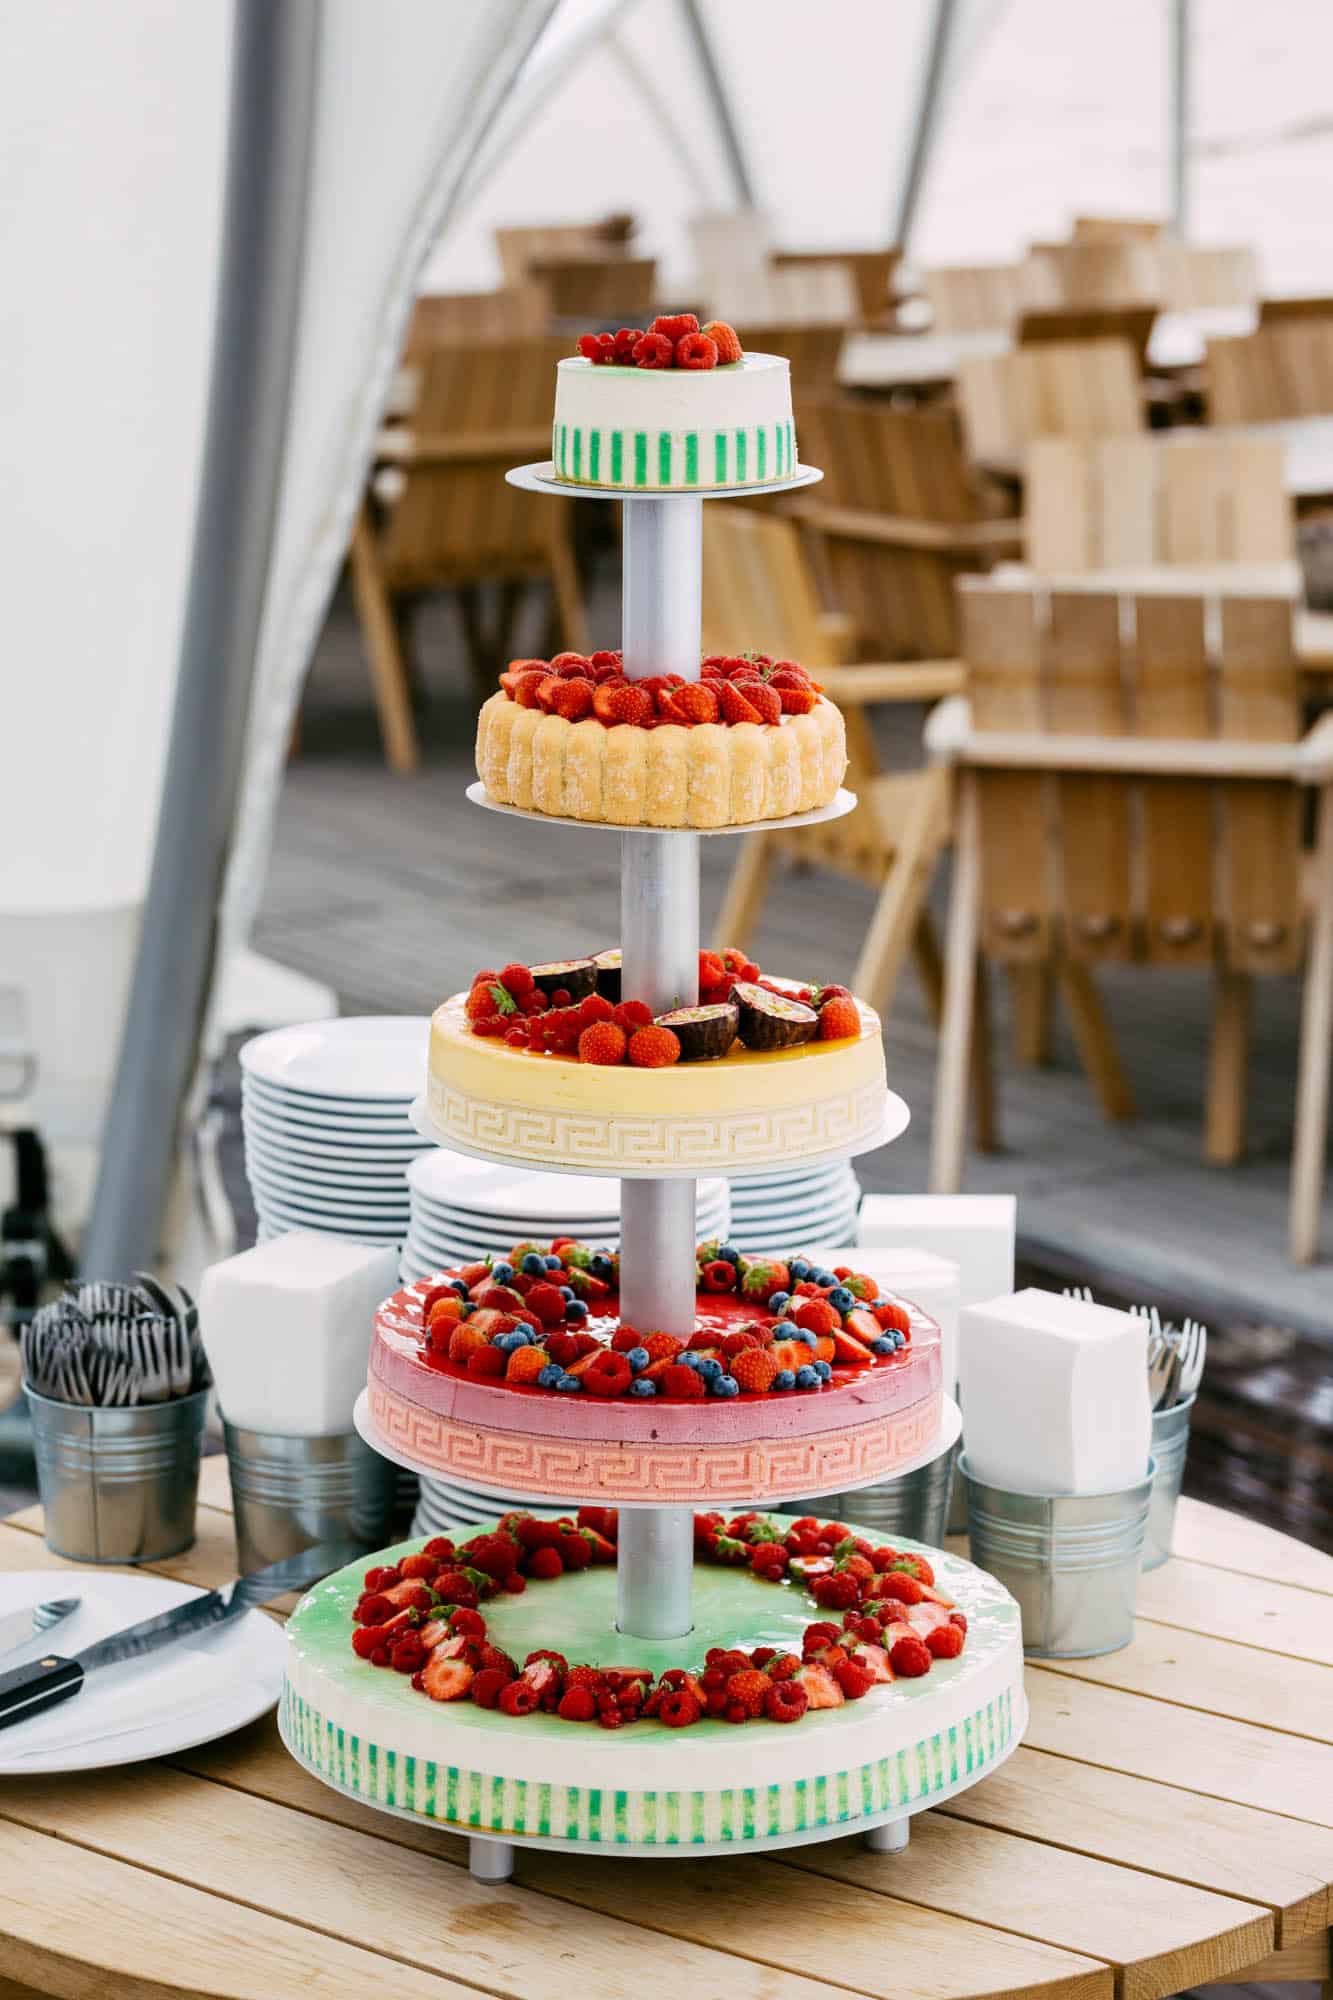 A wedding cake on a table.